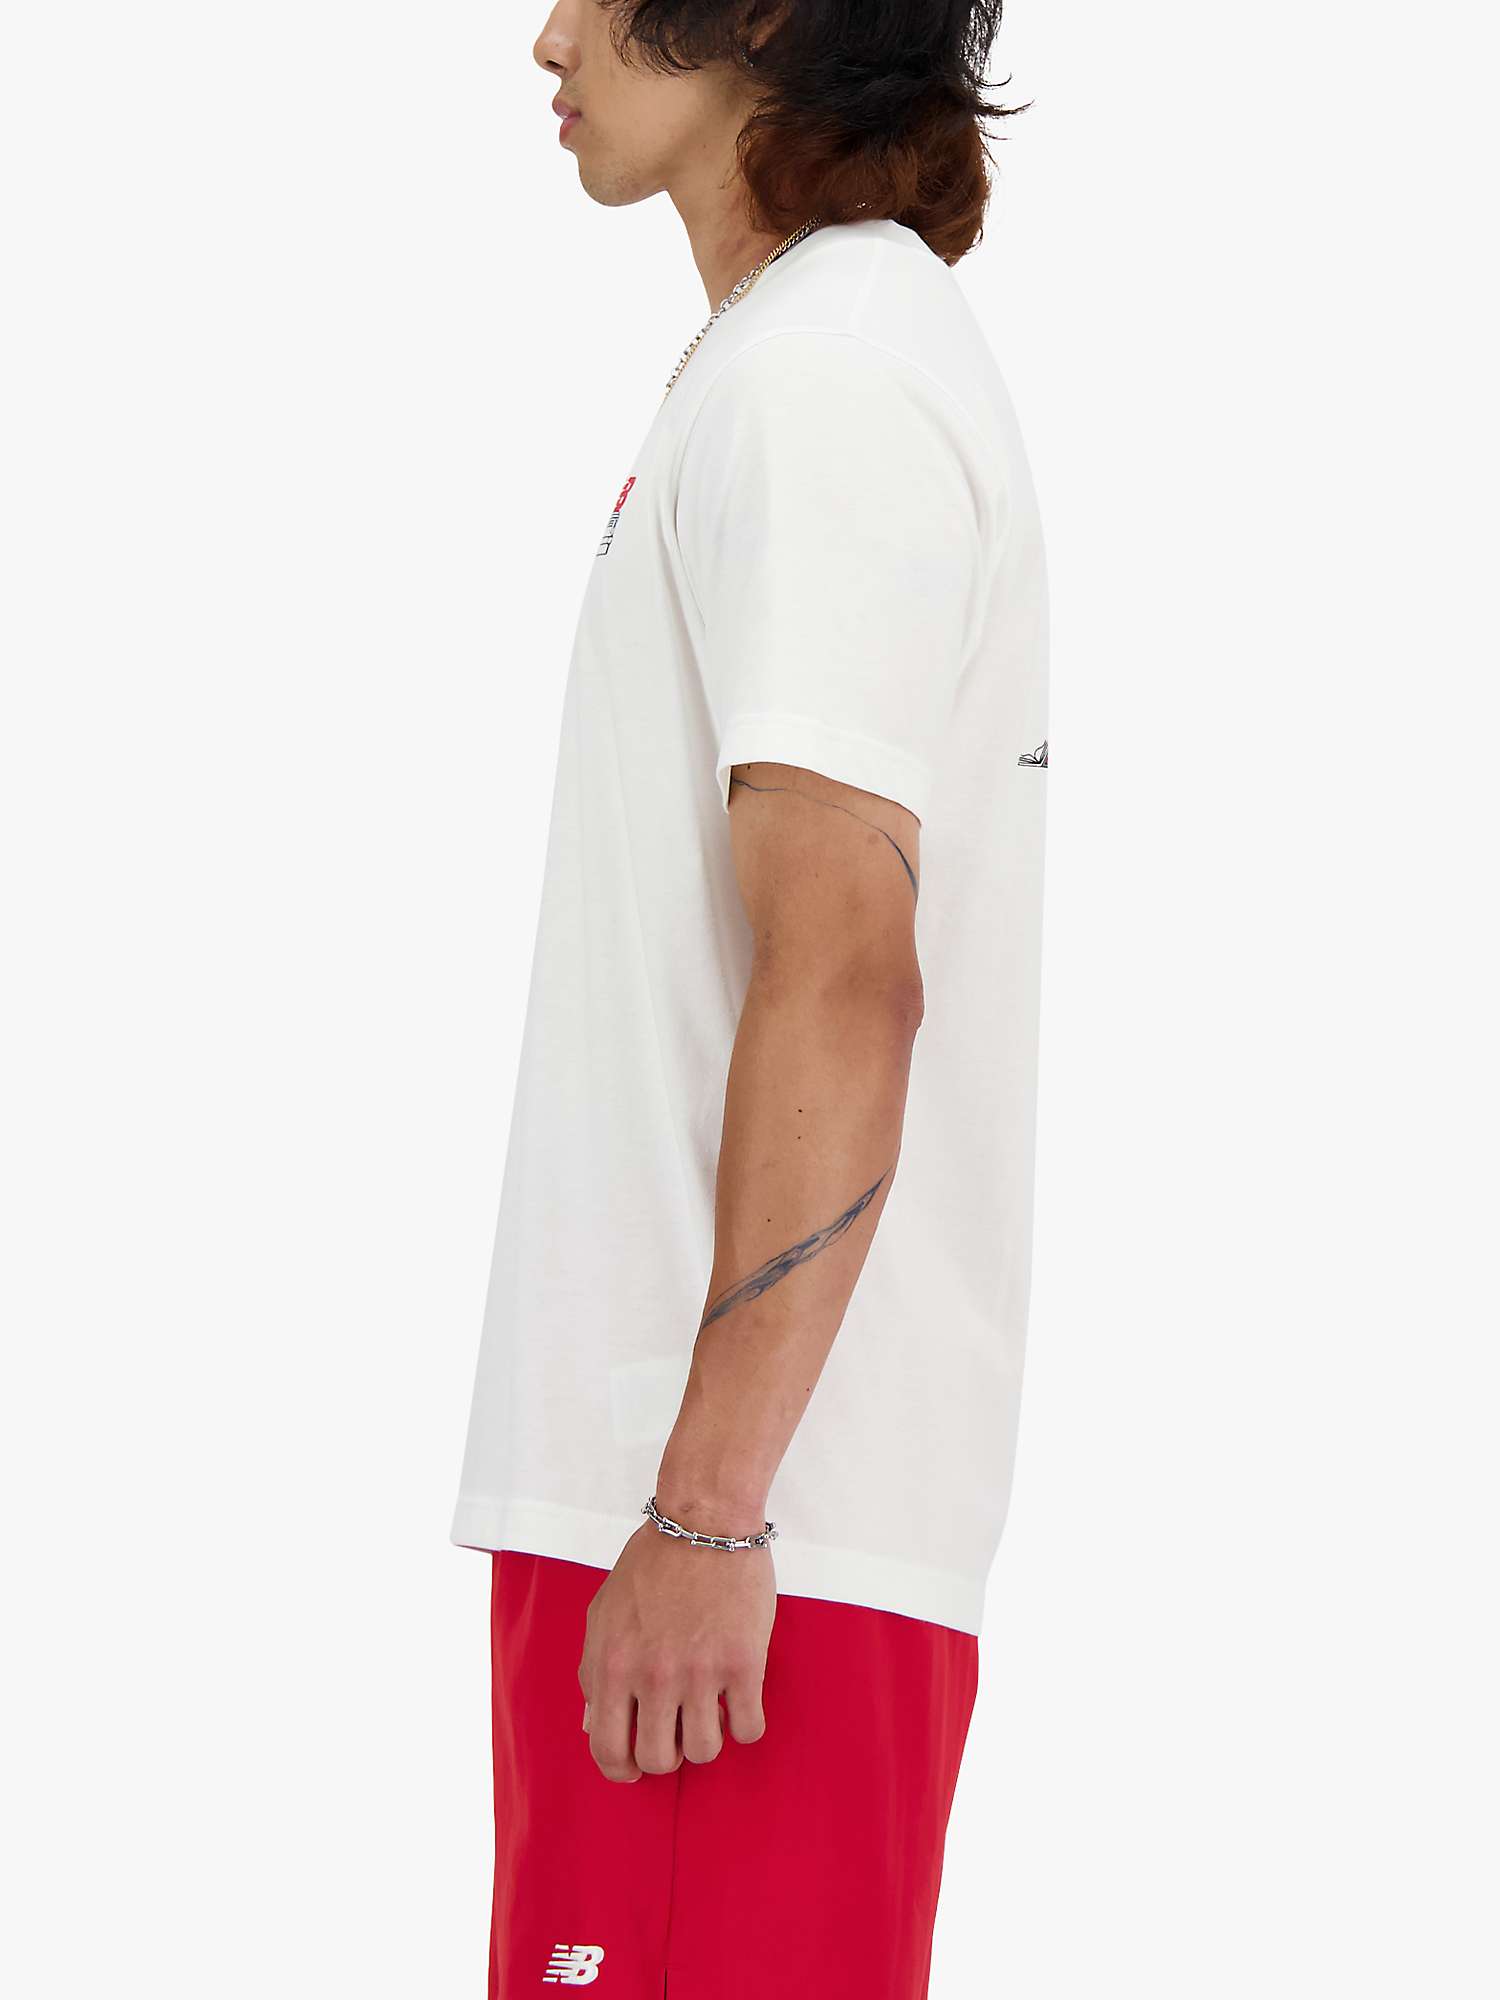 Buy New Balance Graphic T-Shirt, White Online at johnlewis.com